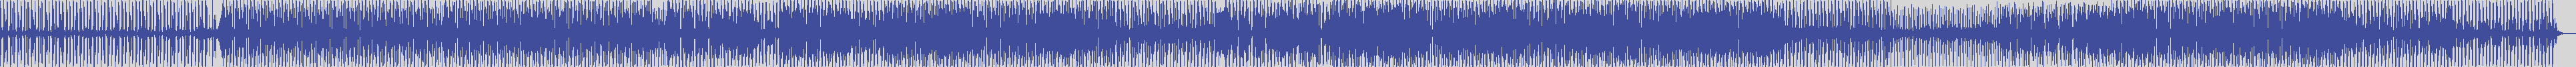 atomic_recordings [AR006] Alexey Lisin - Royal Soft [Roby Arduini & Pagany Deep Rework] audio wave form